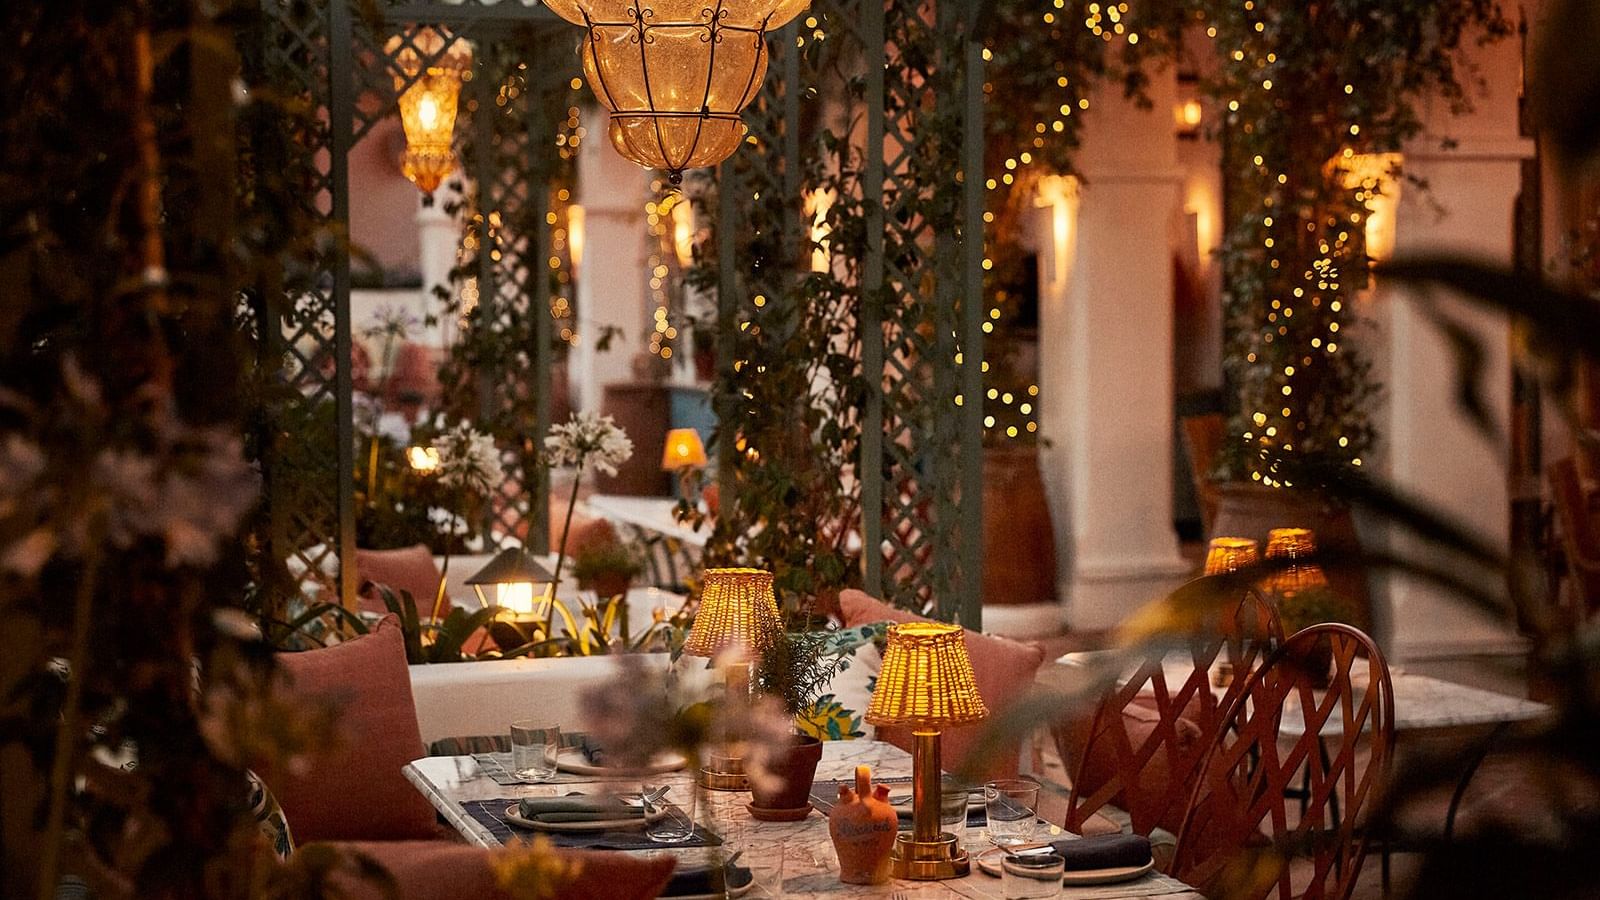 Dining set up at El Patio Restaurant in Marbella Club at night